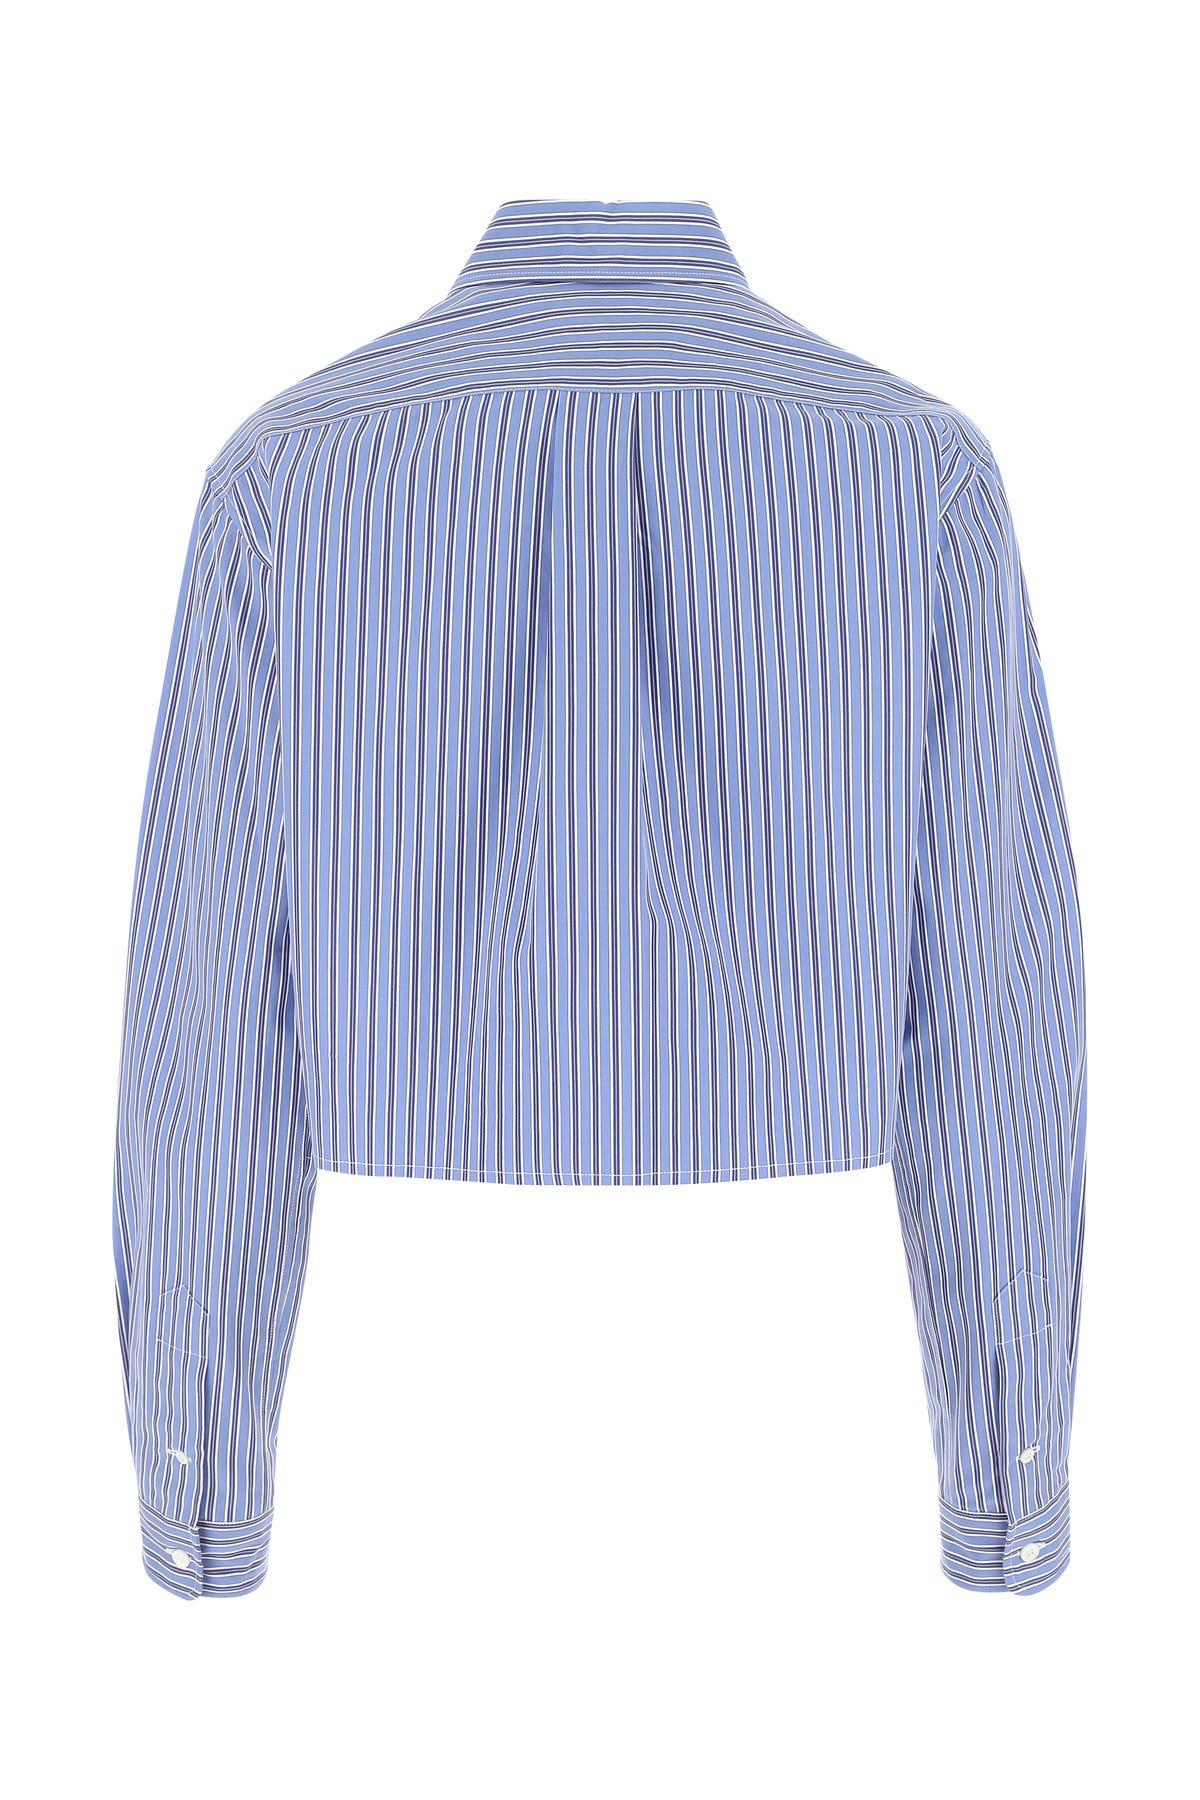 Miu Miu Logo Embroidered Striped Cropped Shirt in Blue | Lyst